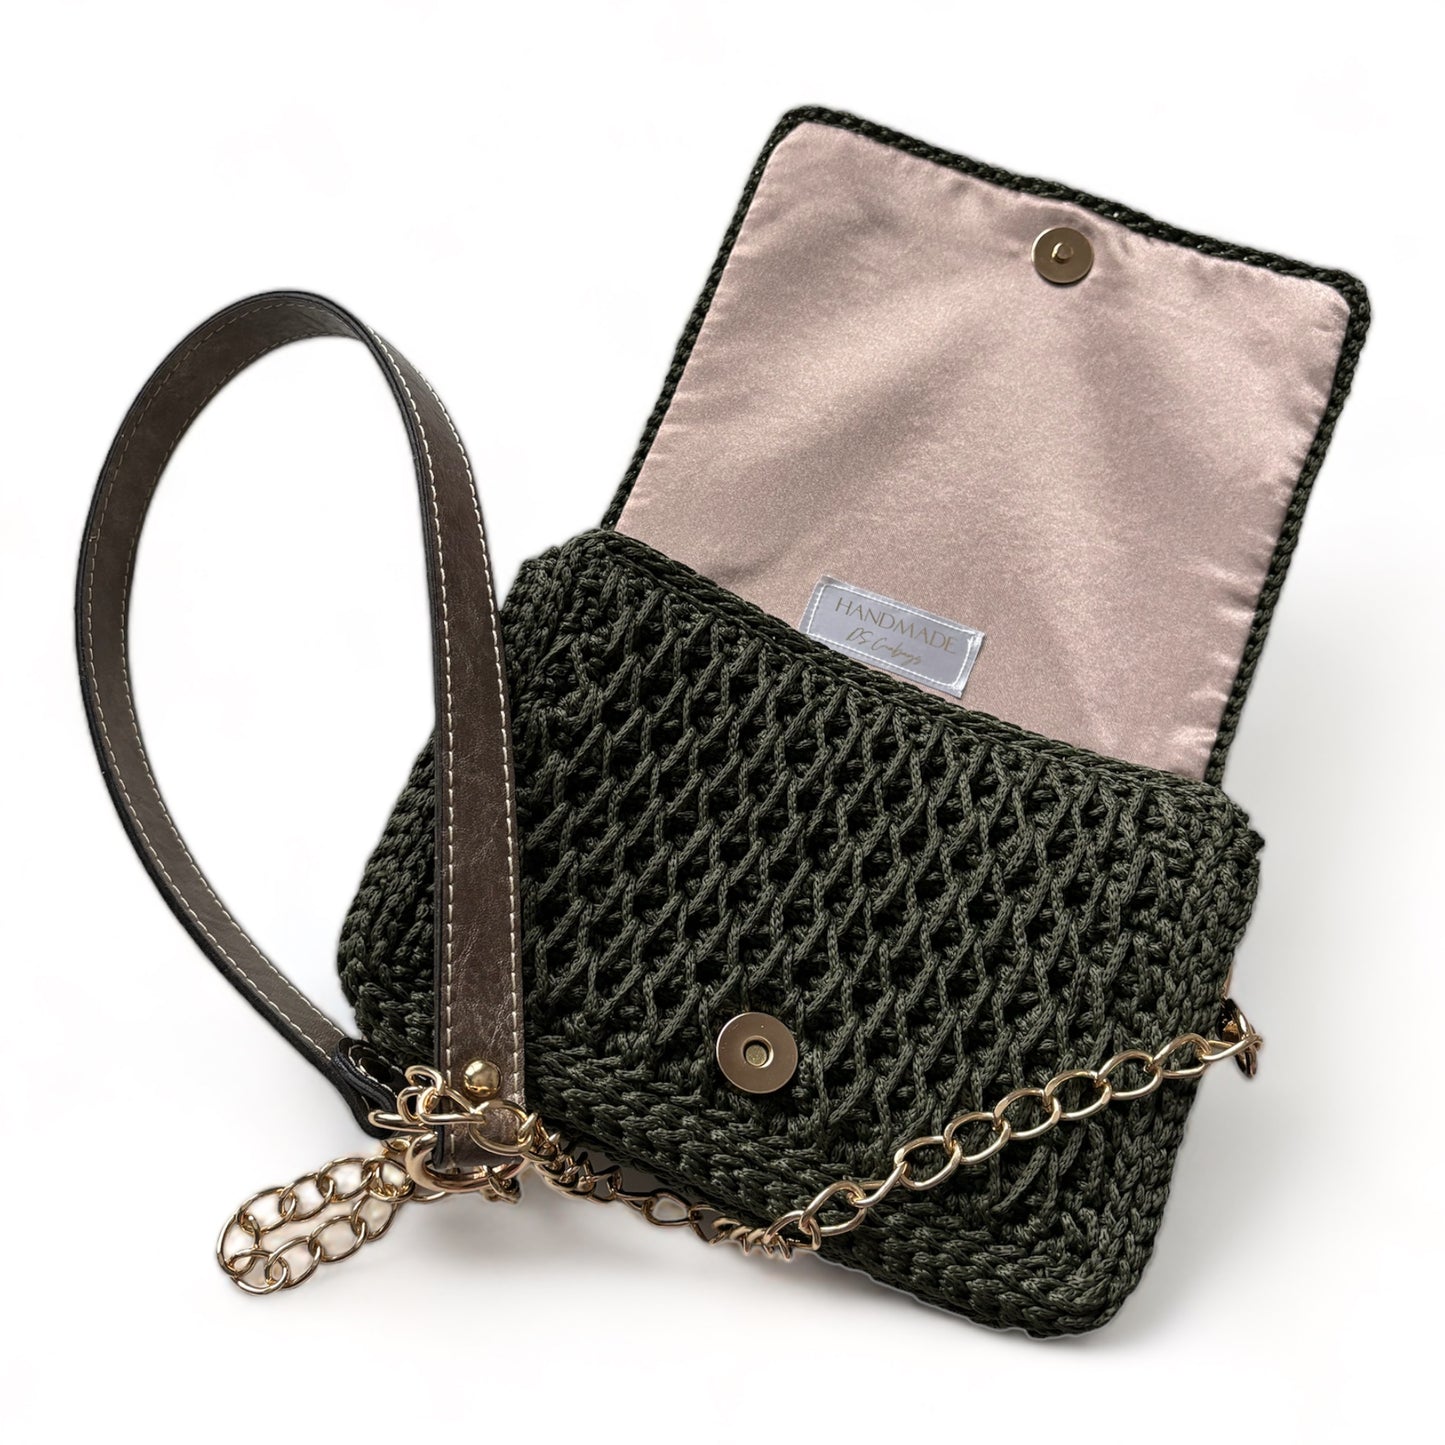 Dark green minimalist handbag with long strap